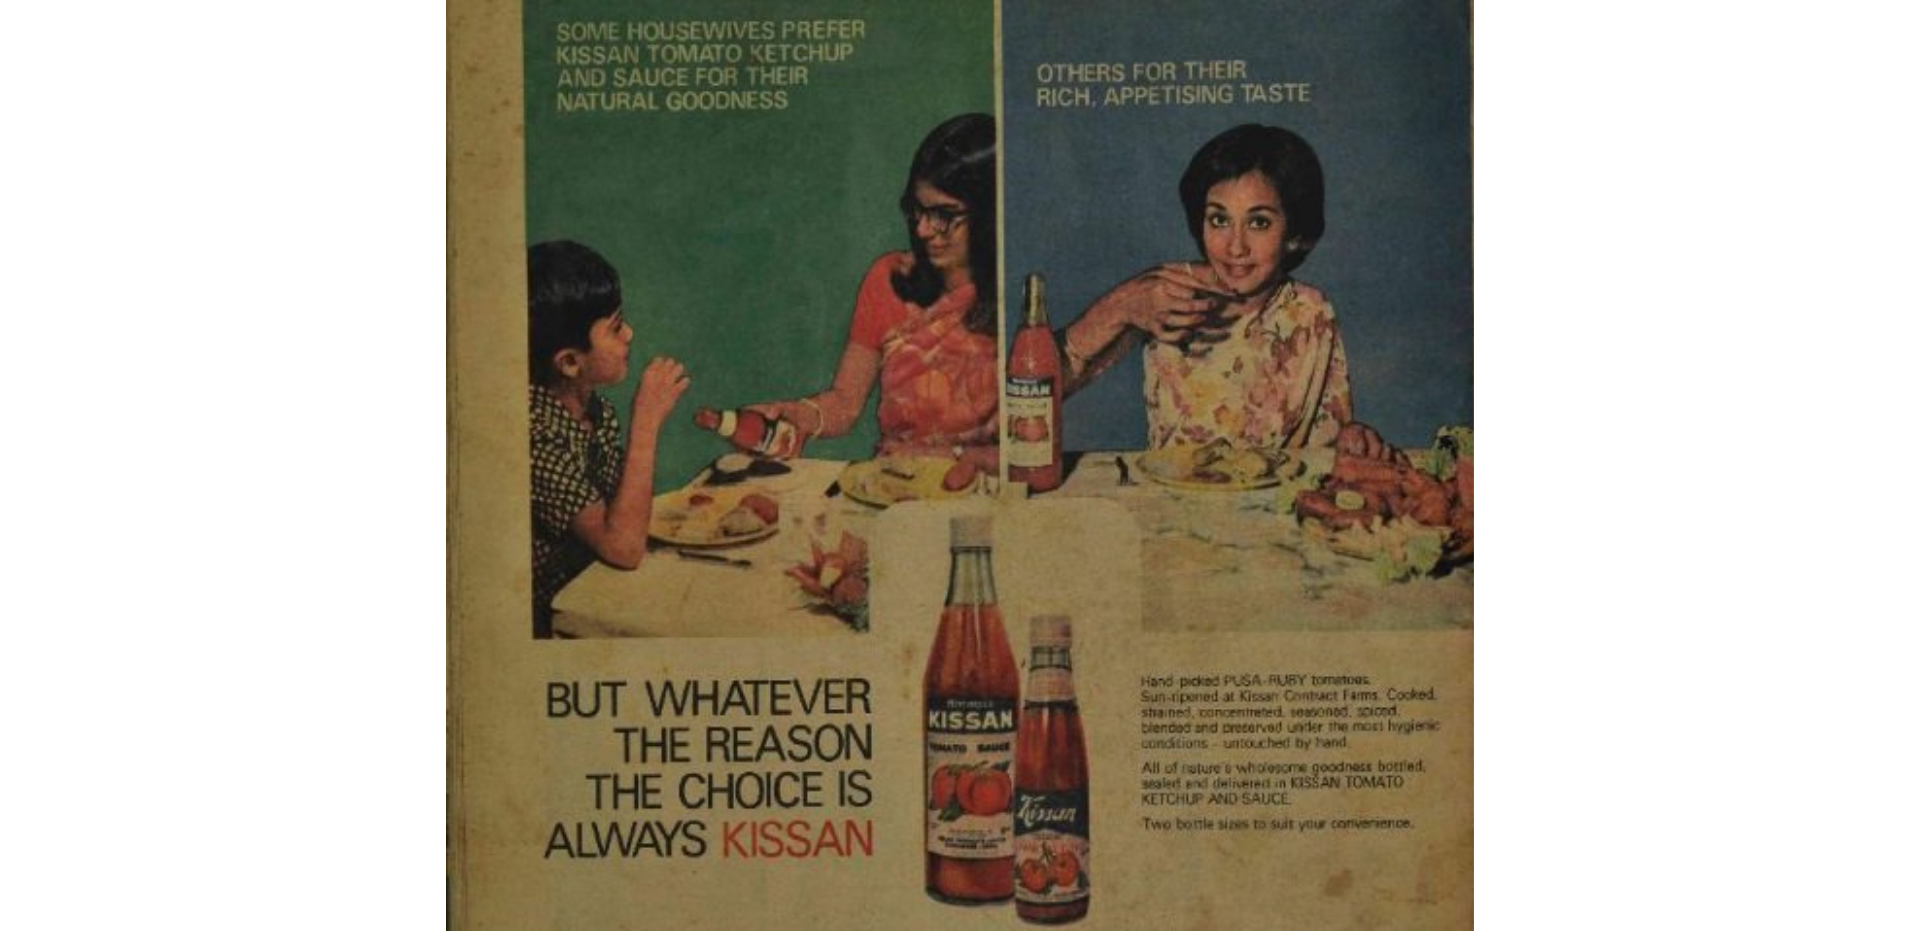 An advertisement for Kissan Tomato Ketchup